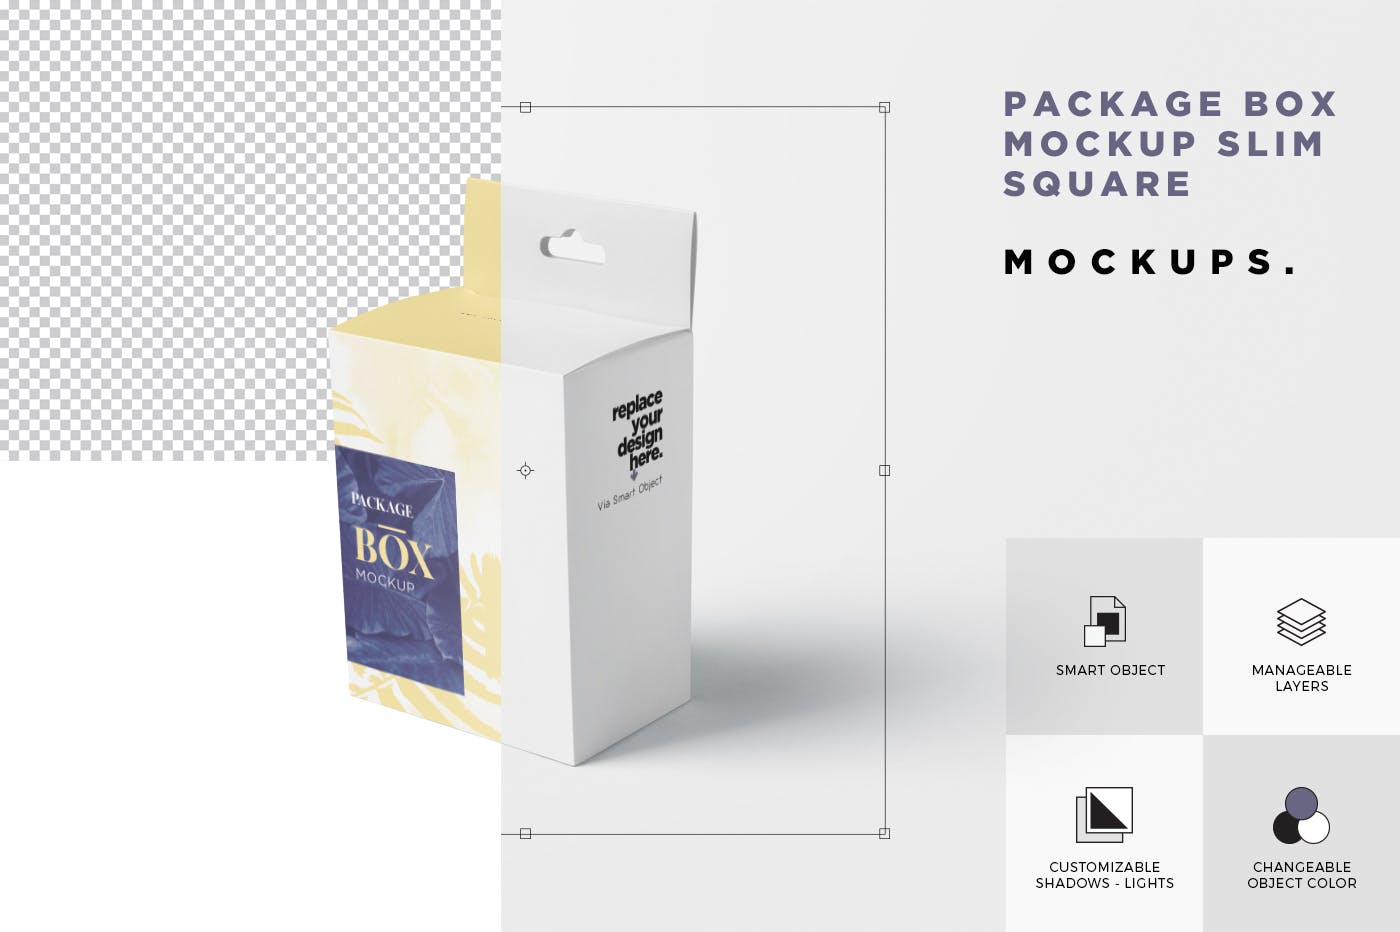 挂耳式扁平矩形包装盒第一素材精选模板 Package Box Mockup Set – Slim Square with Hanger插图(6)